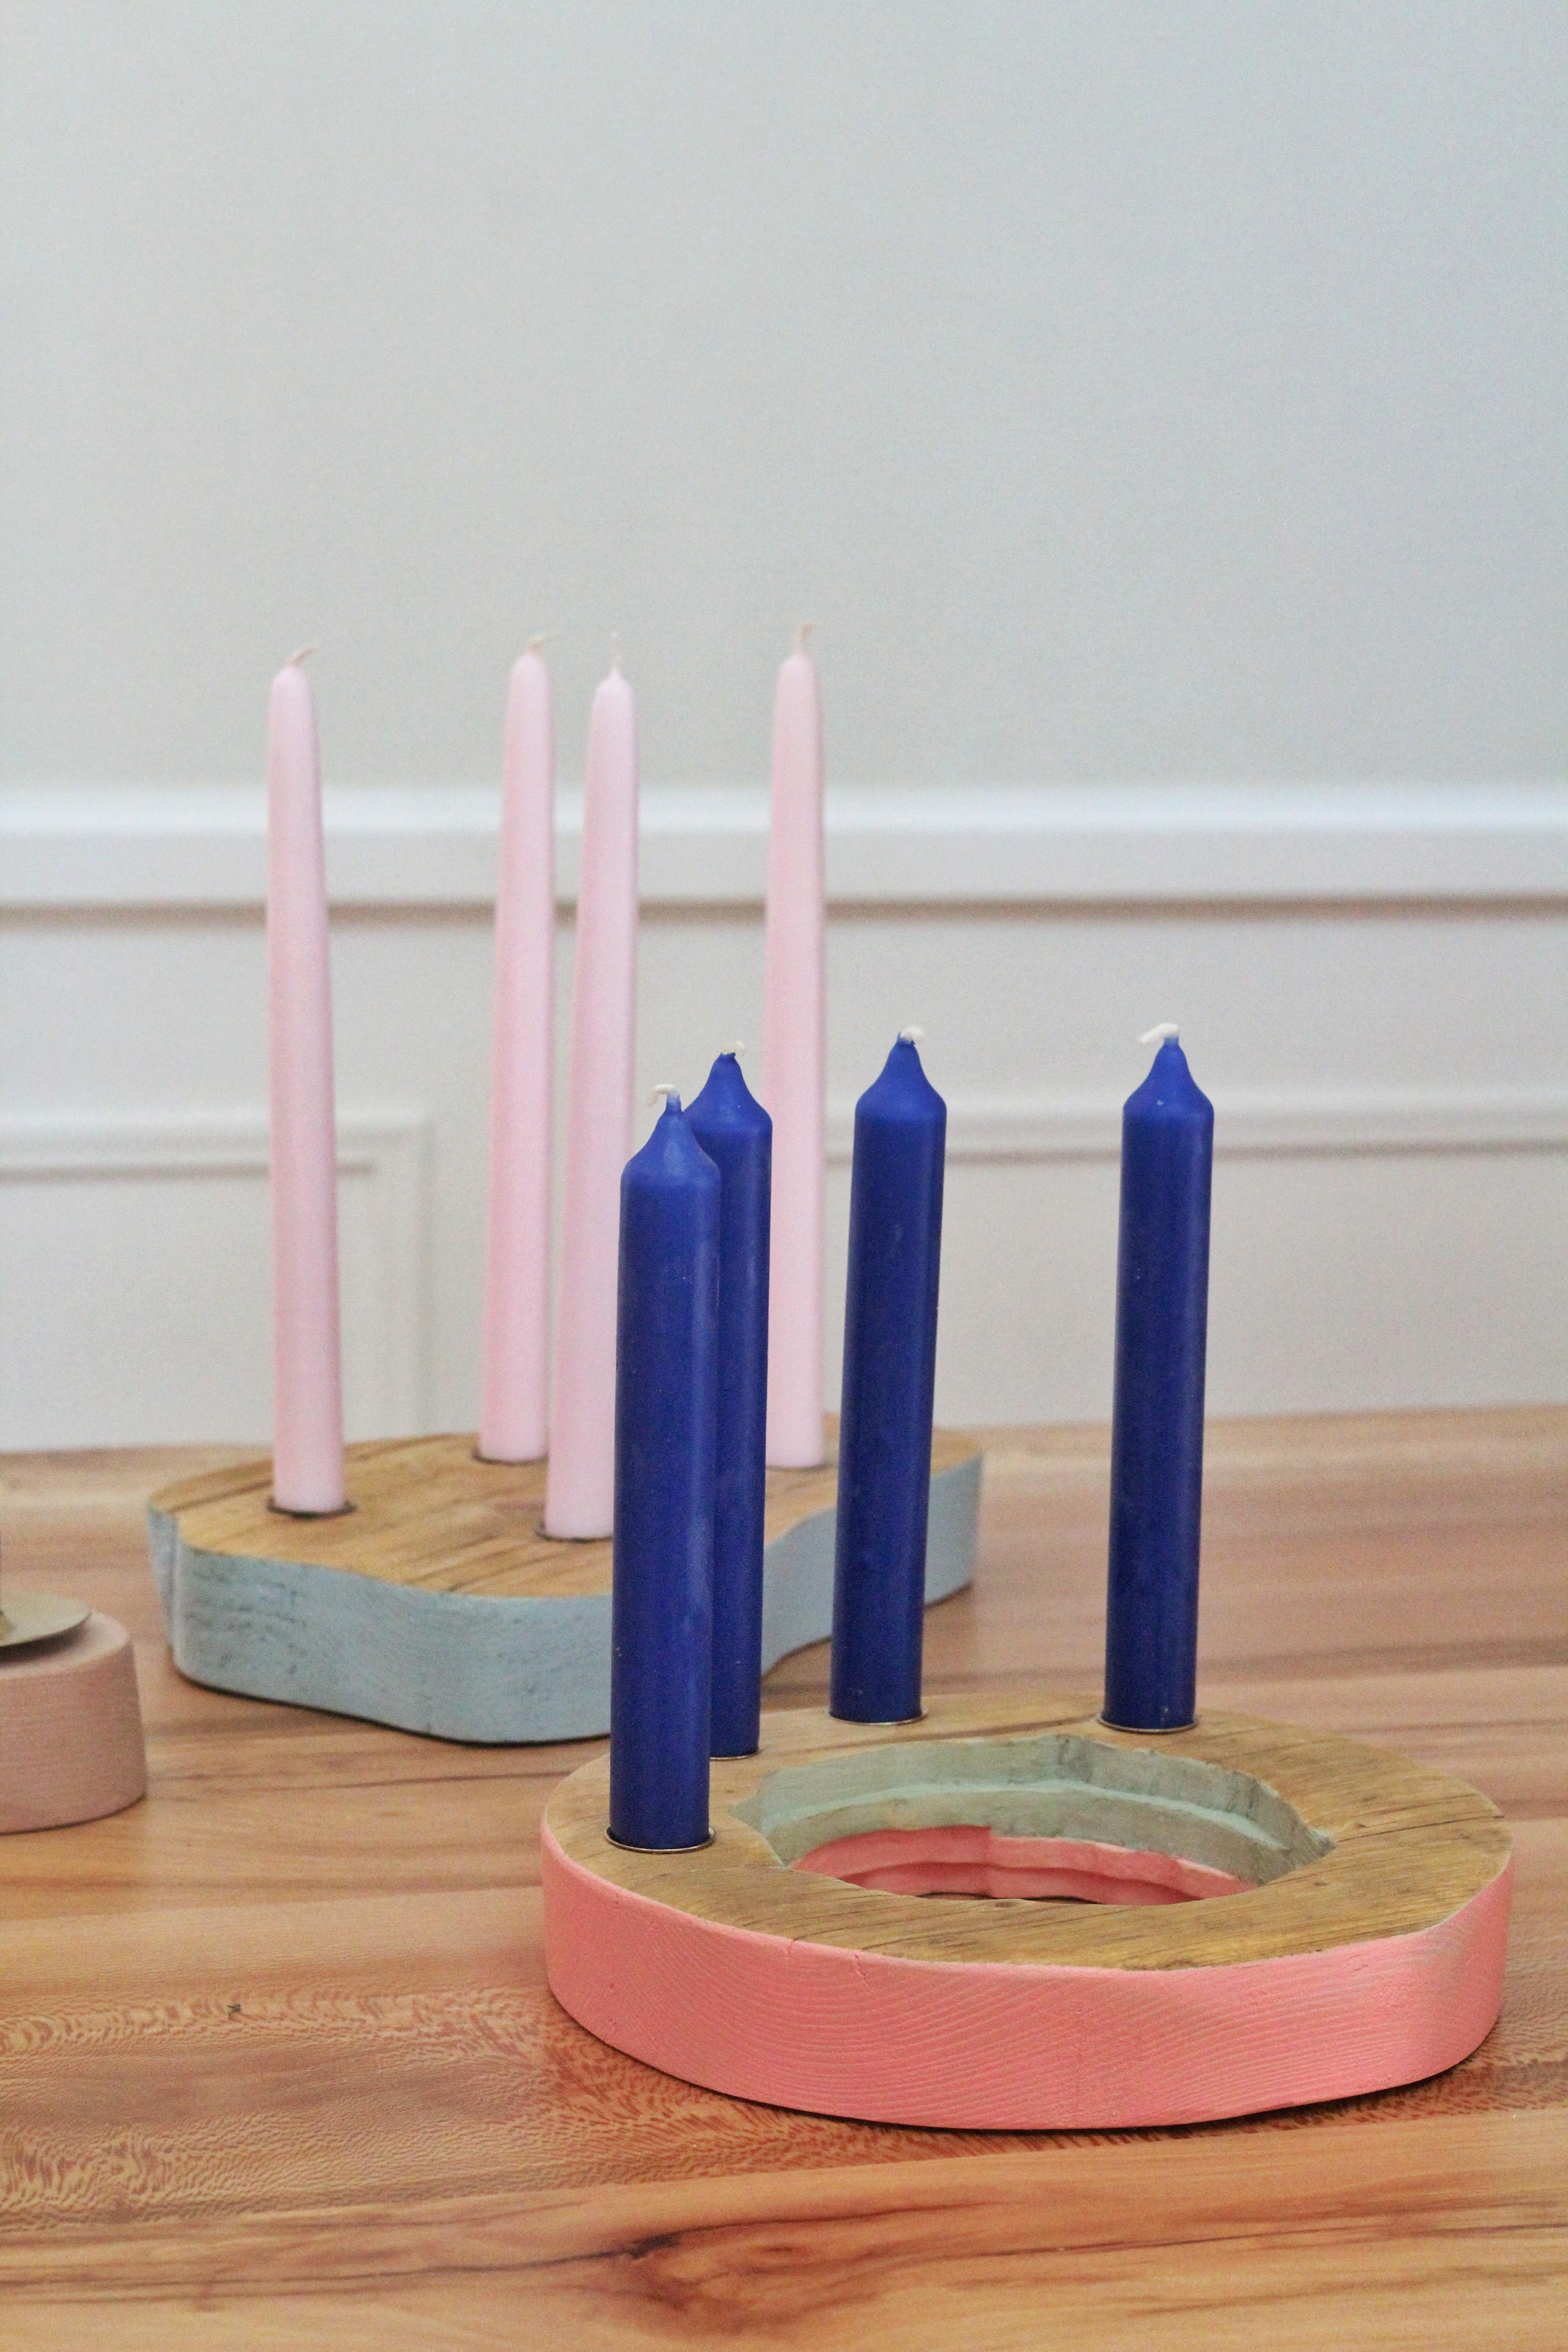 Kerzenständer selbstgemacht - aus Holz- und Farbresten
#upcycling #adventskranz #altholz